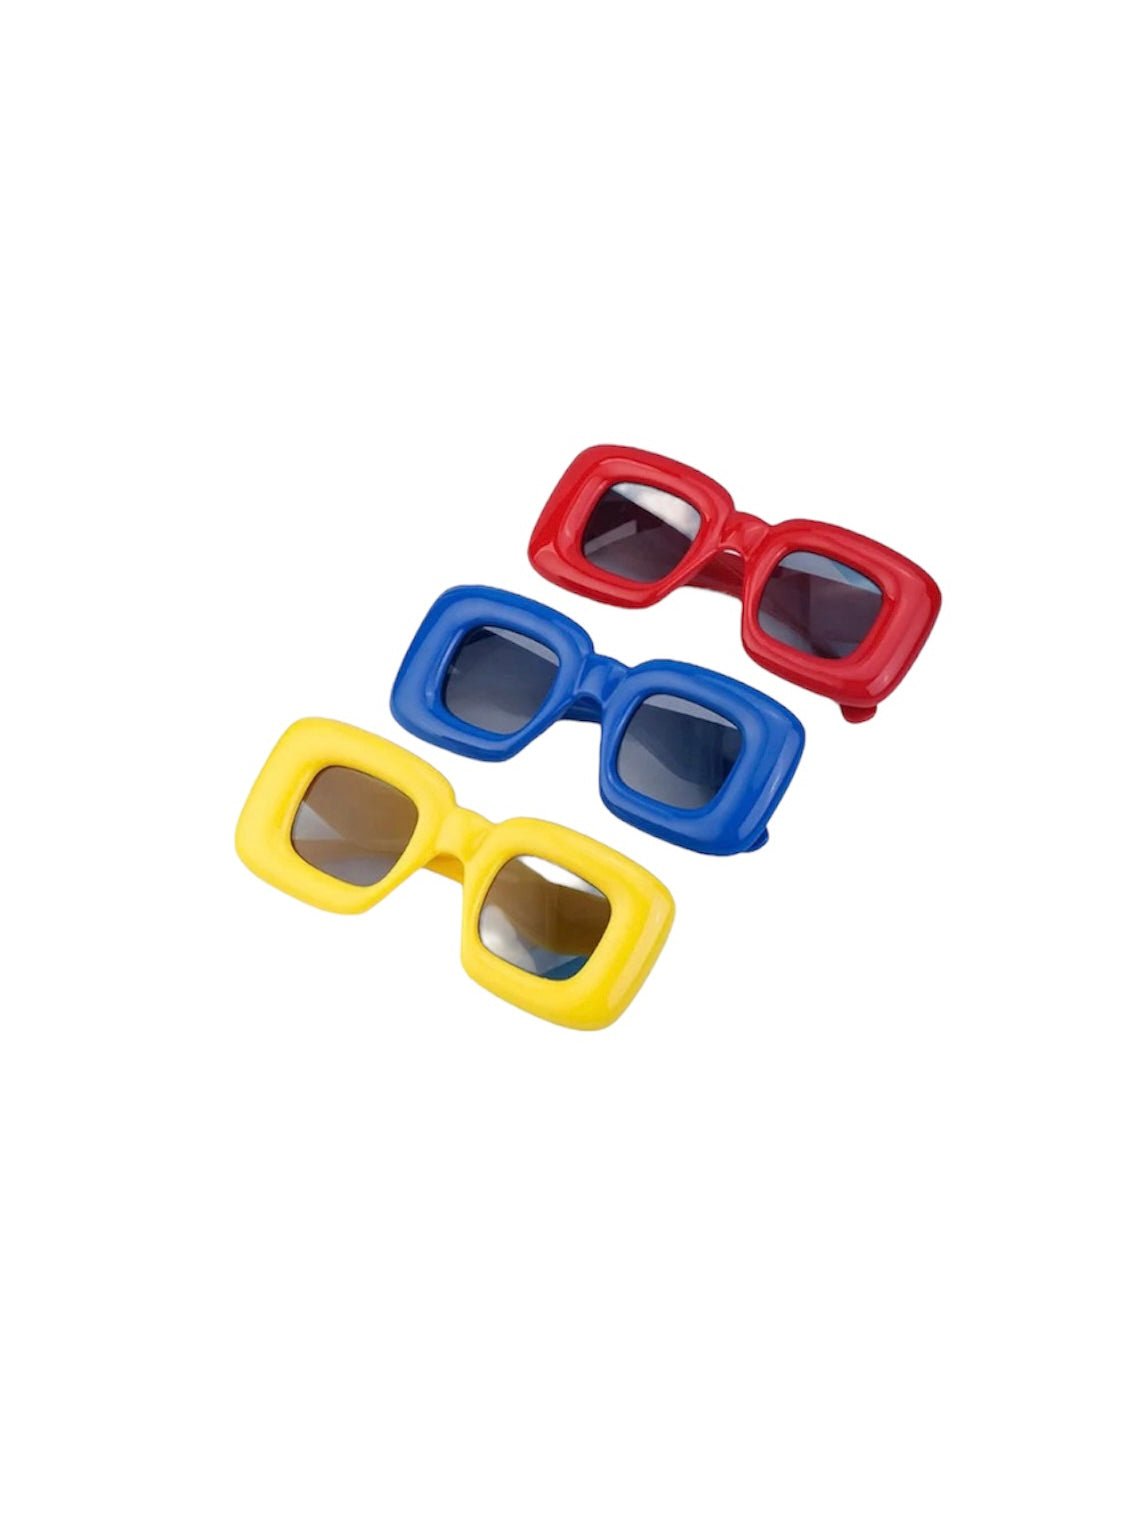 Chunky Square Frame Glasses - Accessories spo-cs-disabled, spo-default, spo-disabled, spo-notify-me-disabled